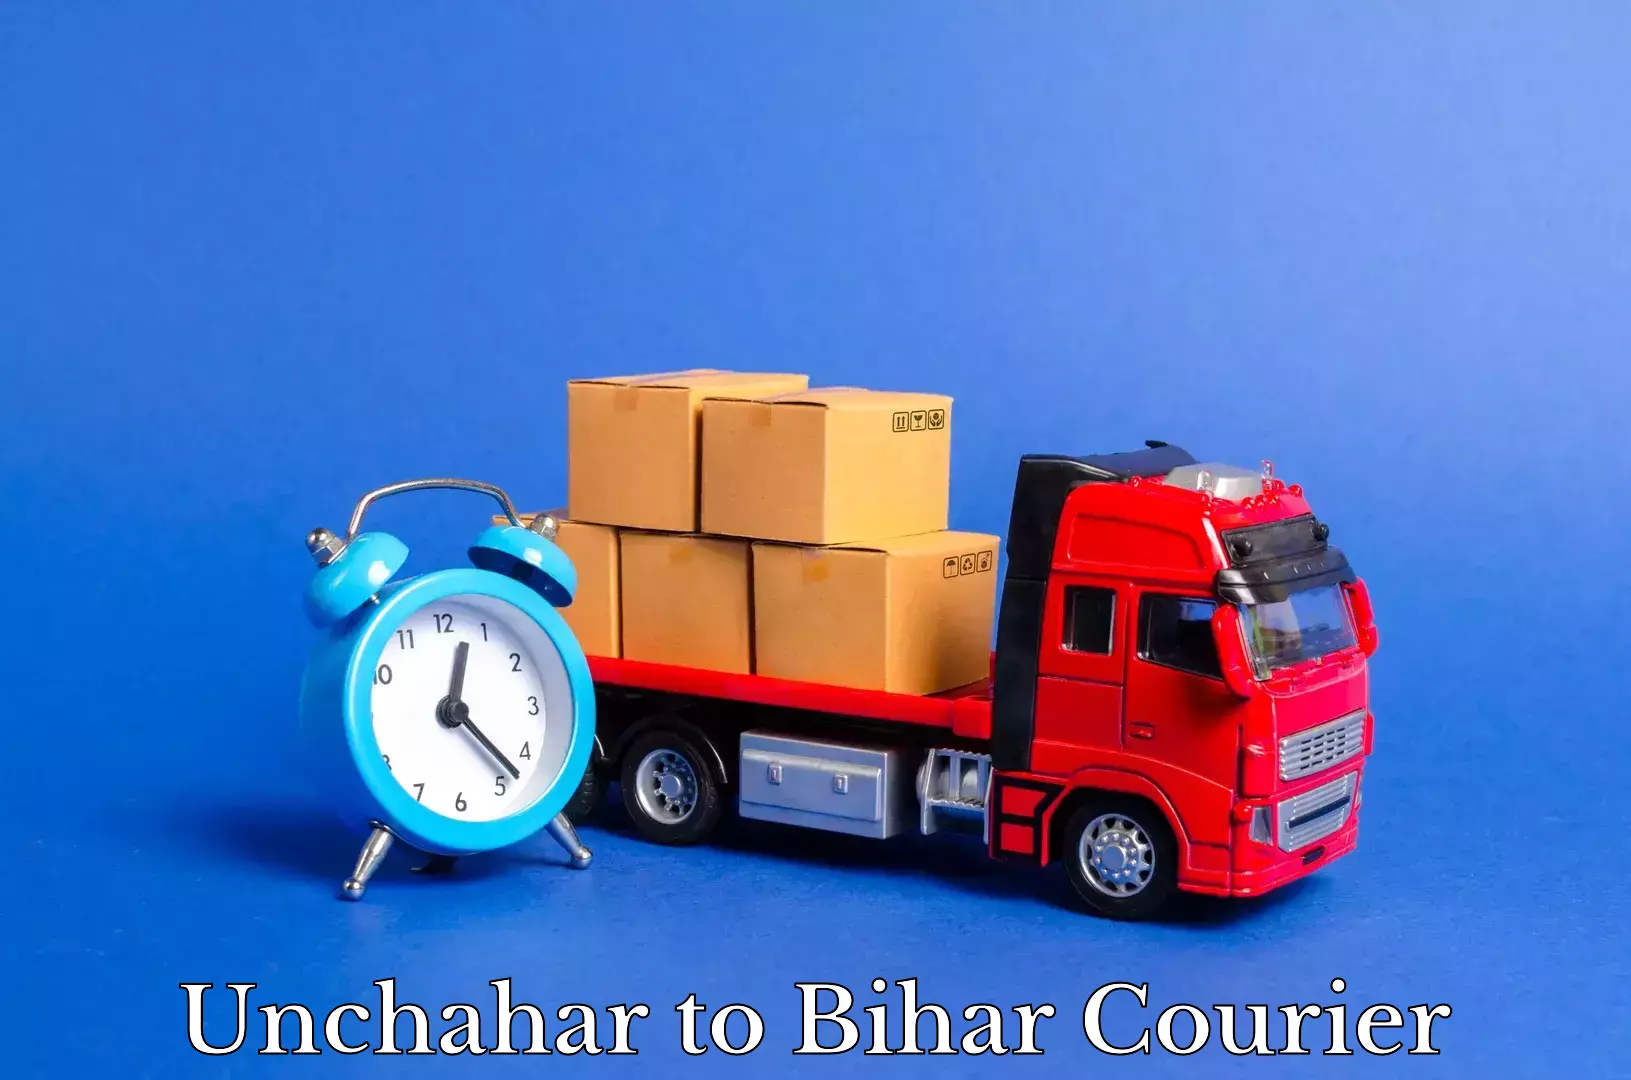 Professional furniture movers Unchahar to Bihar